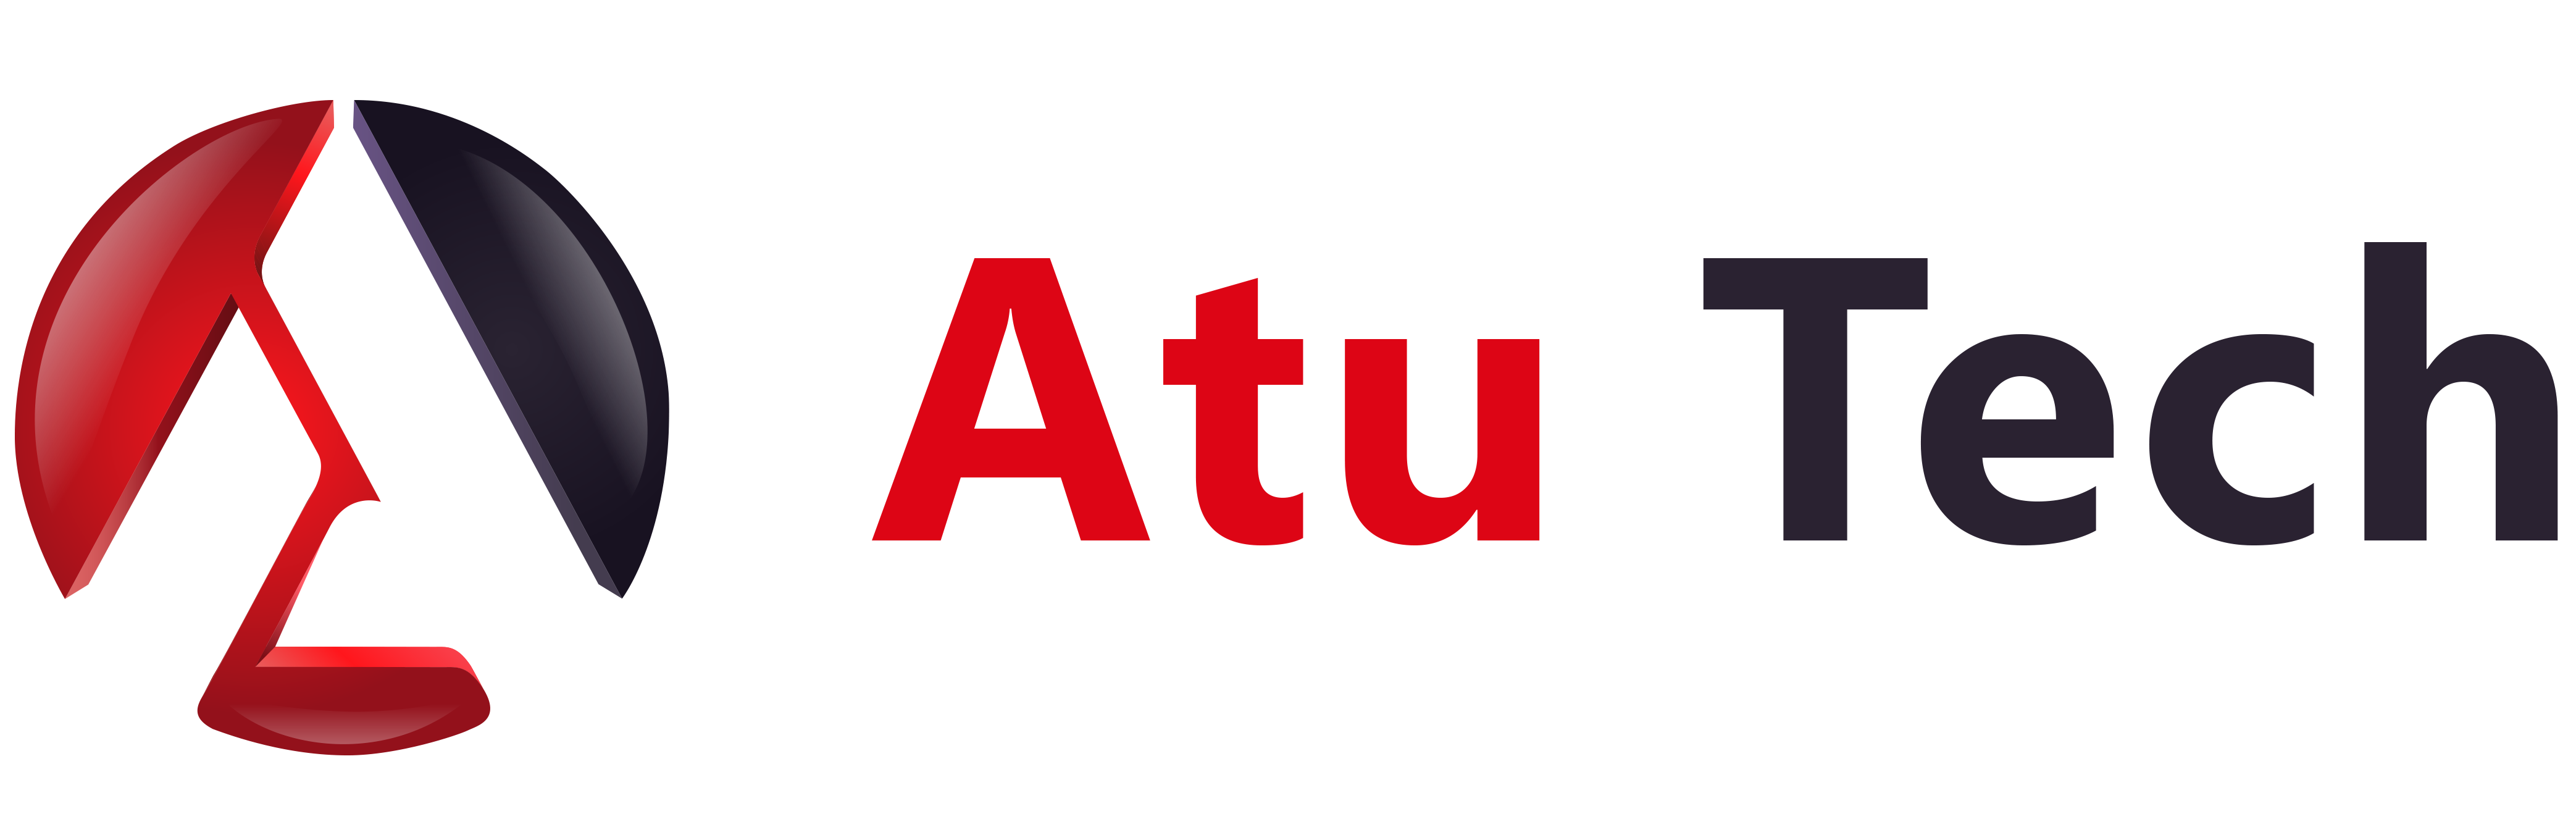 Atu Tech logo